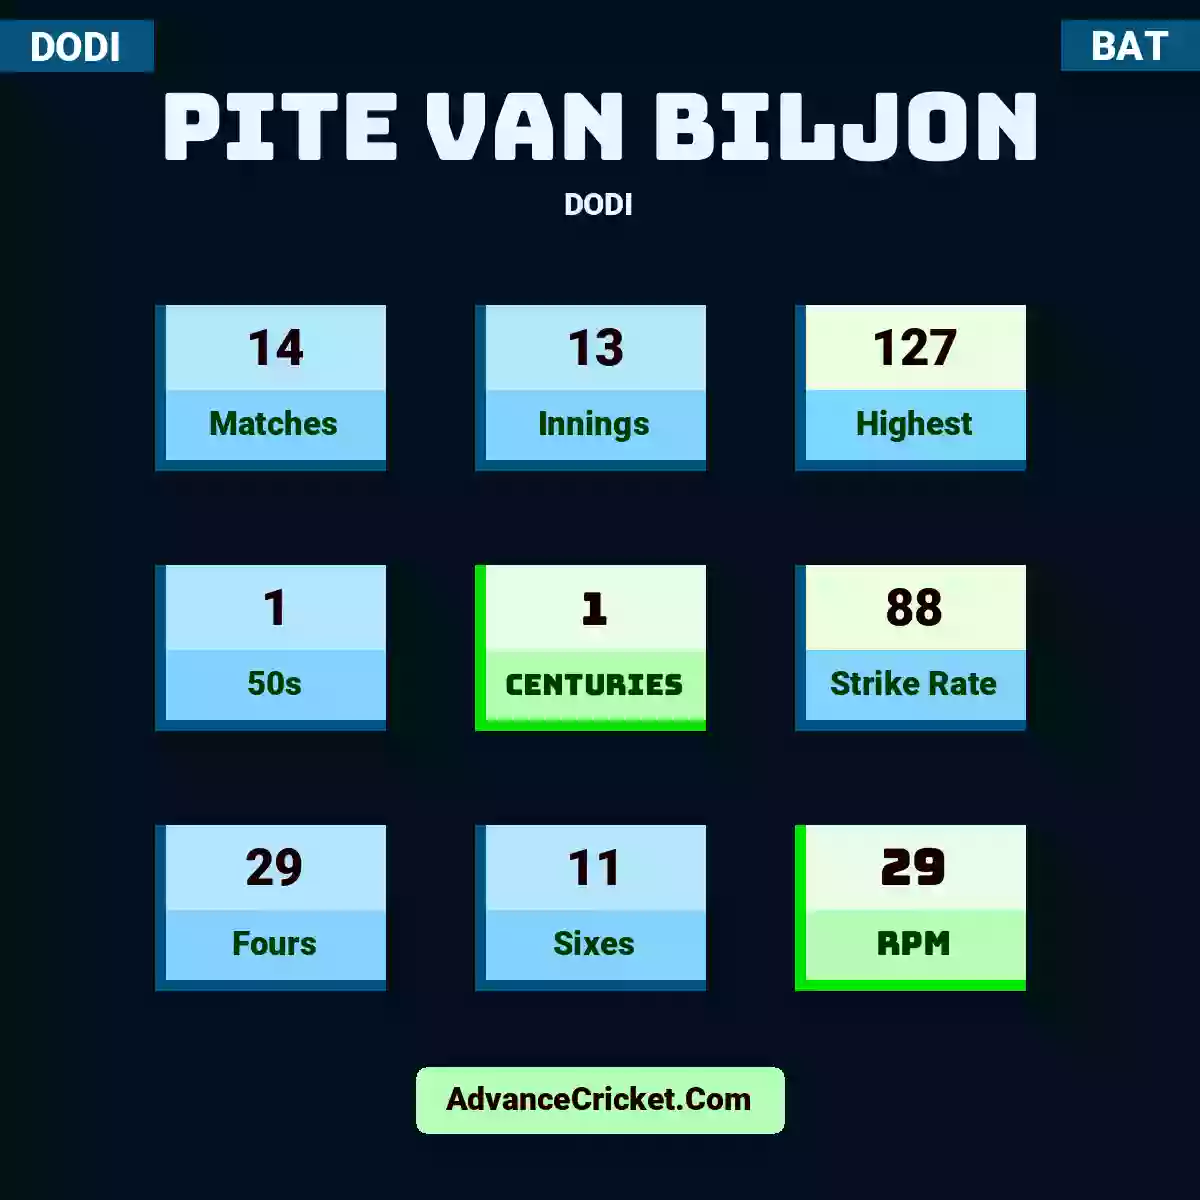 Pite van Biljon DODI , Pite van Biljon played 14 matches, scored 127 runs as highest, 1 half-centuries, and 1 centuries, with a strike rate of 88. P.VBiljon hit 29 fours and 11 sixes, with an RPM of 29.